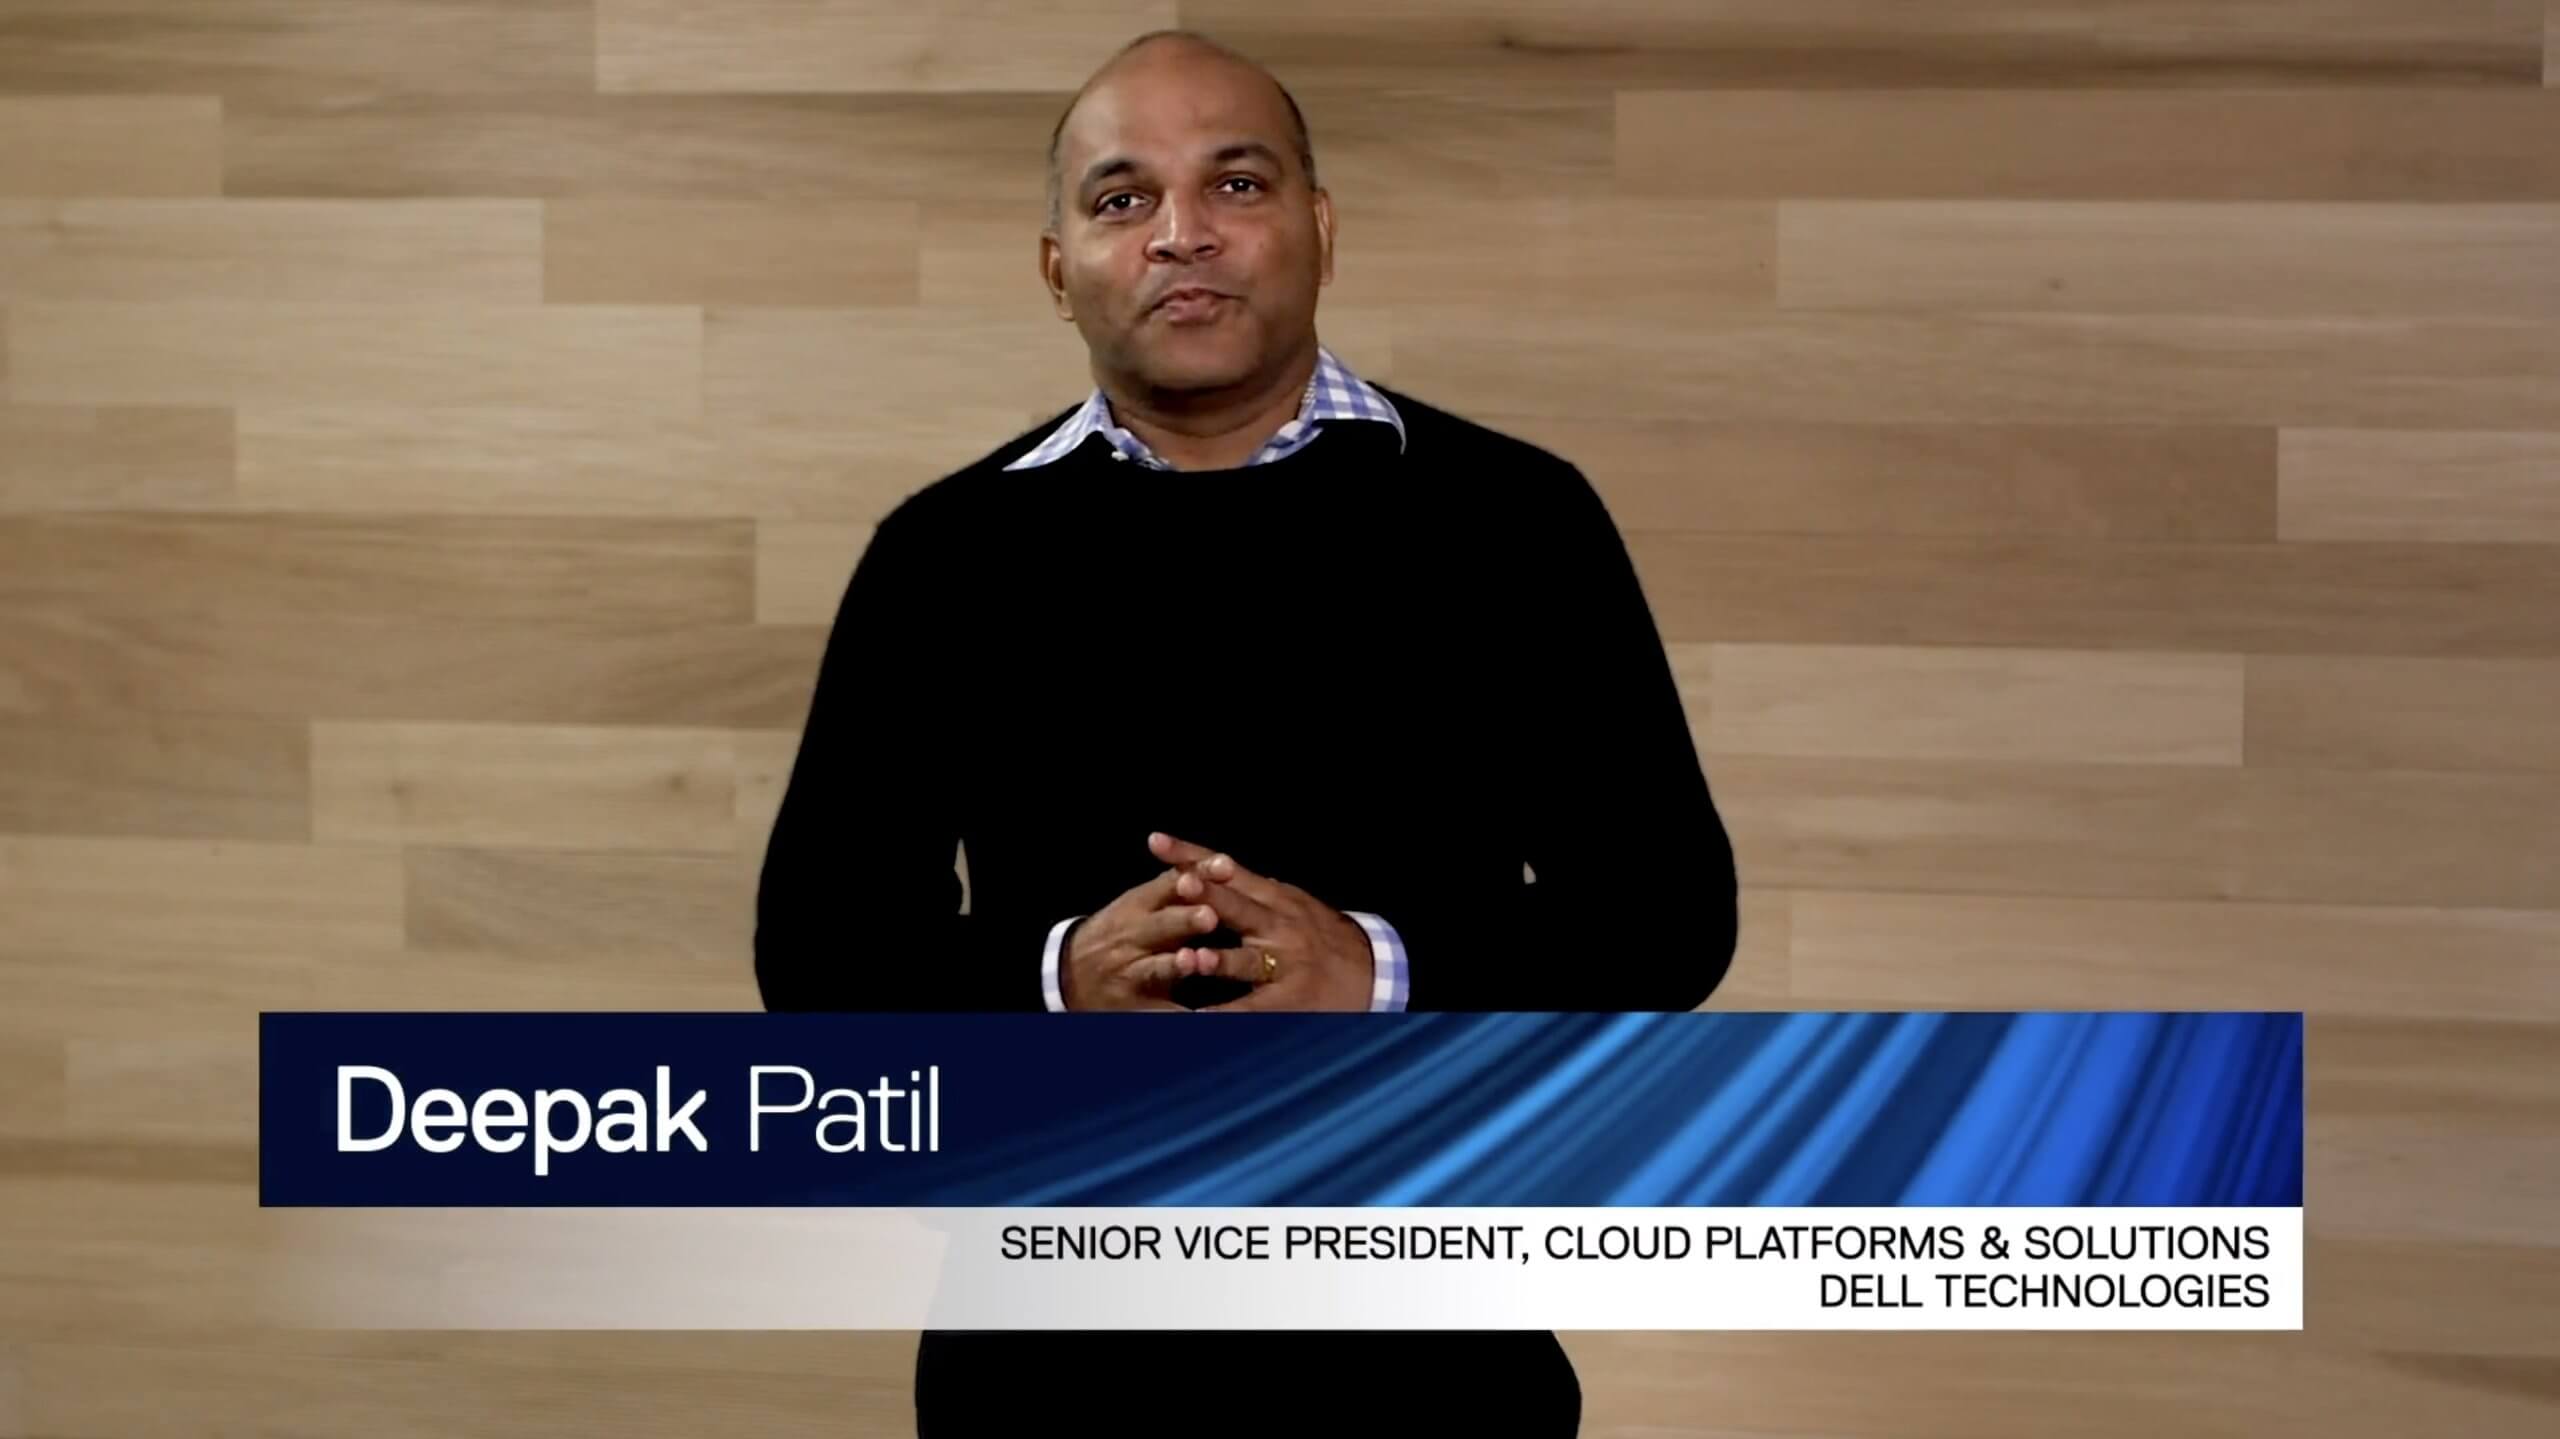 Deepak Patil, Senior Vice President, Cloud Platforms & Solutions at Dell Technologies